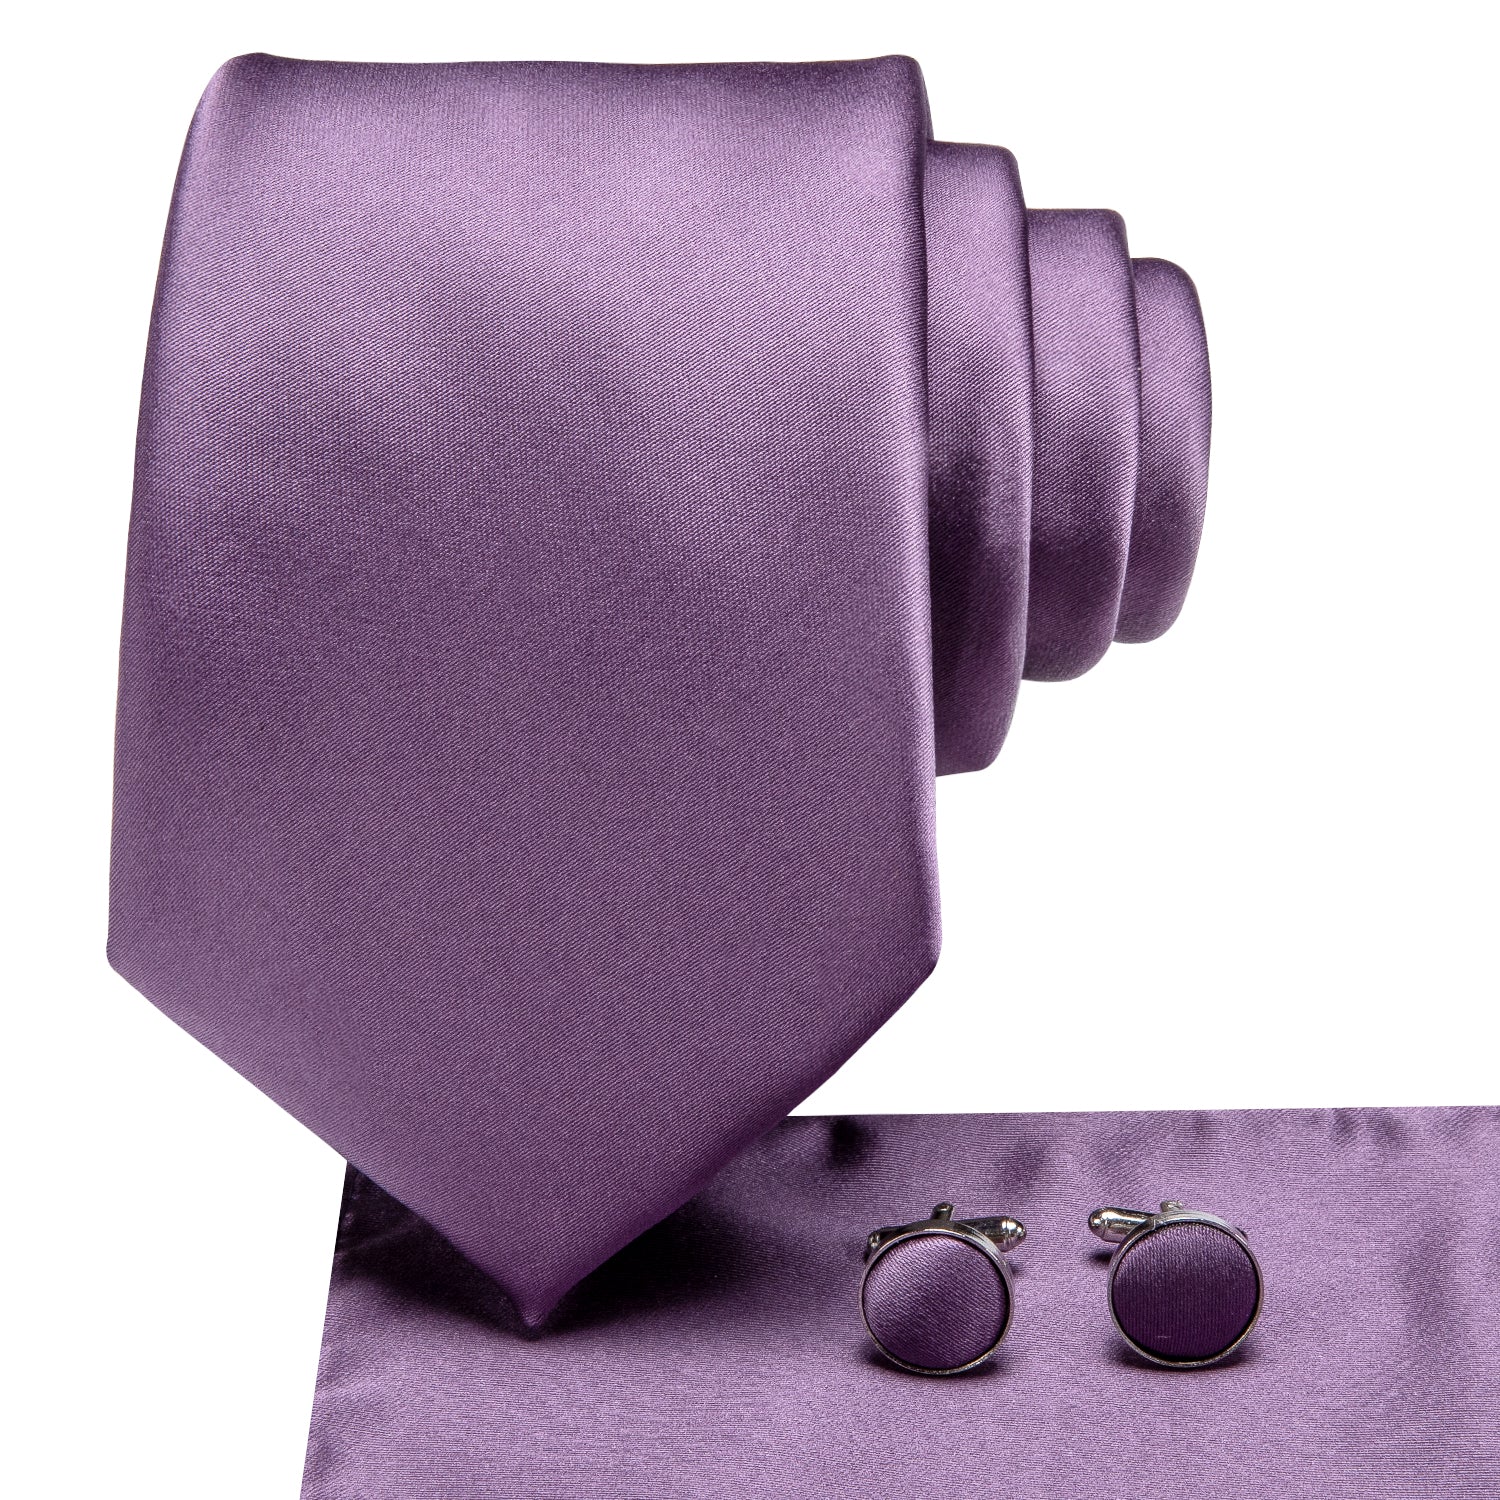 Purple Solid Tie Pocket Square Cufflinks Set